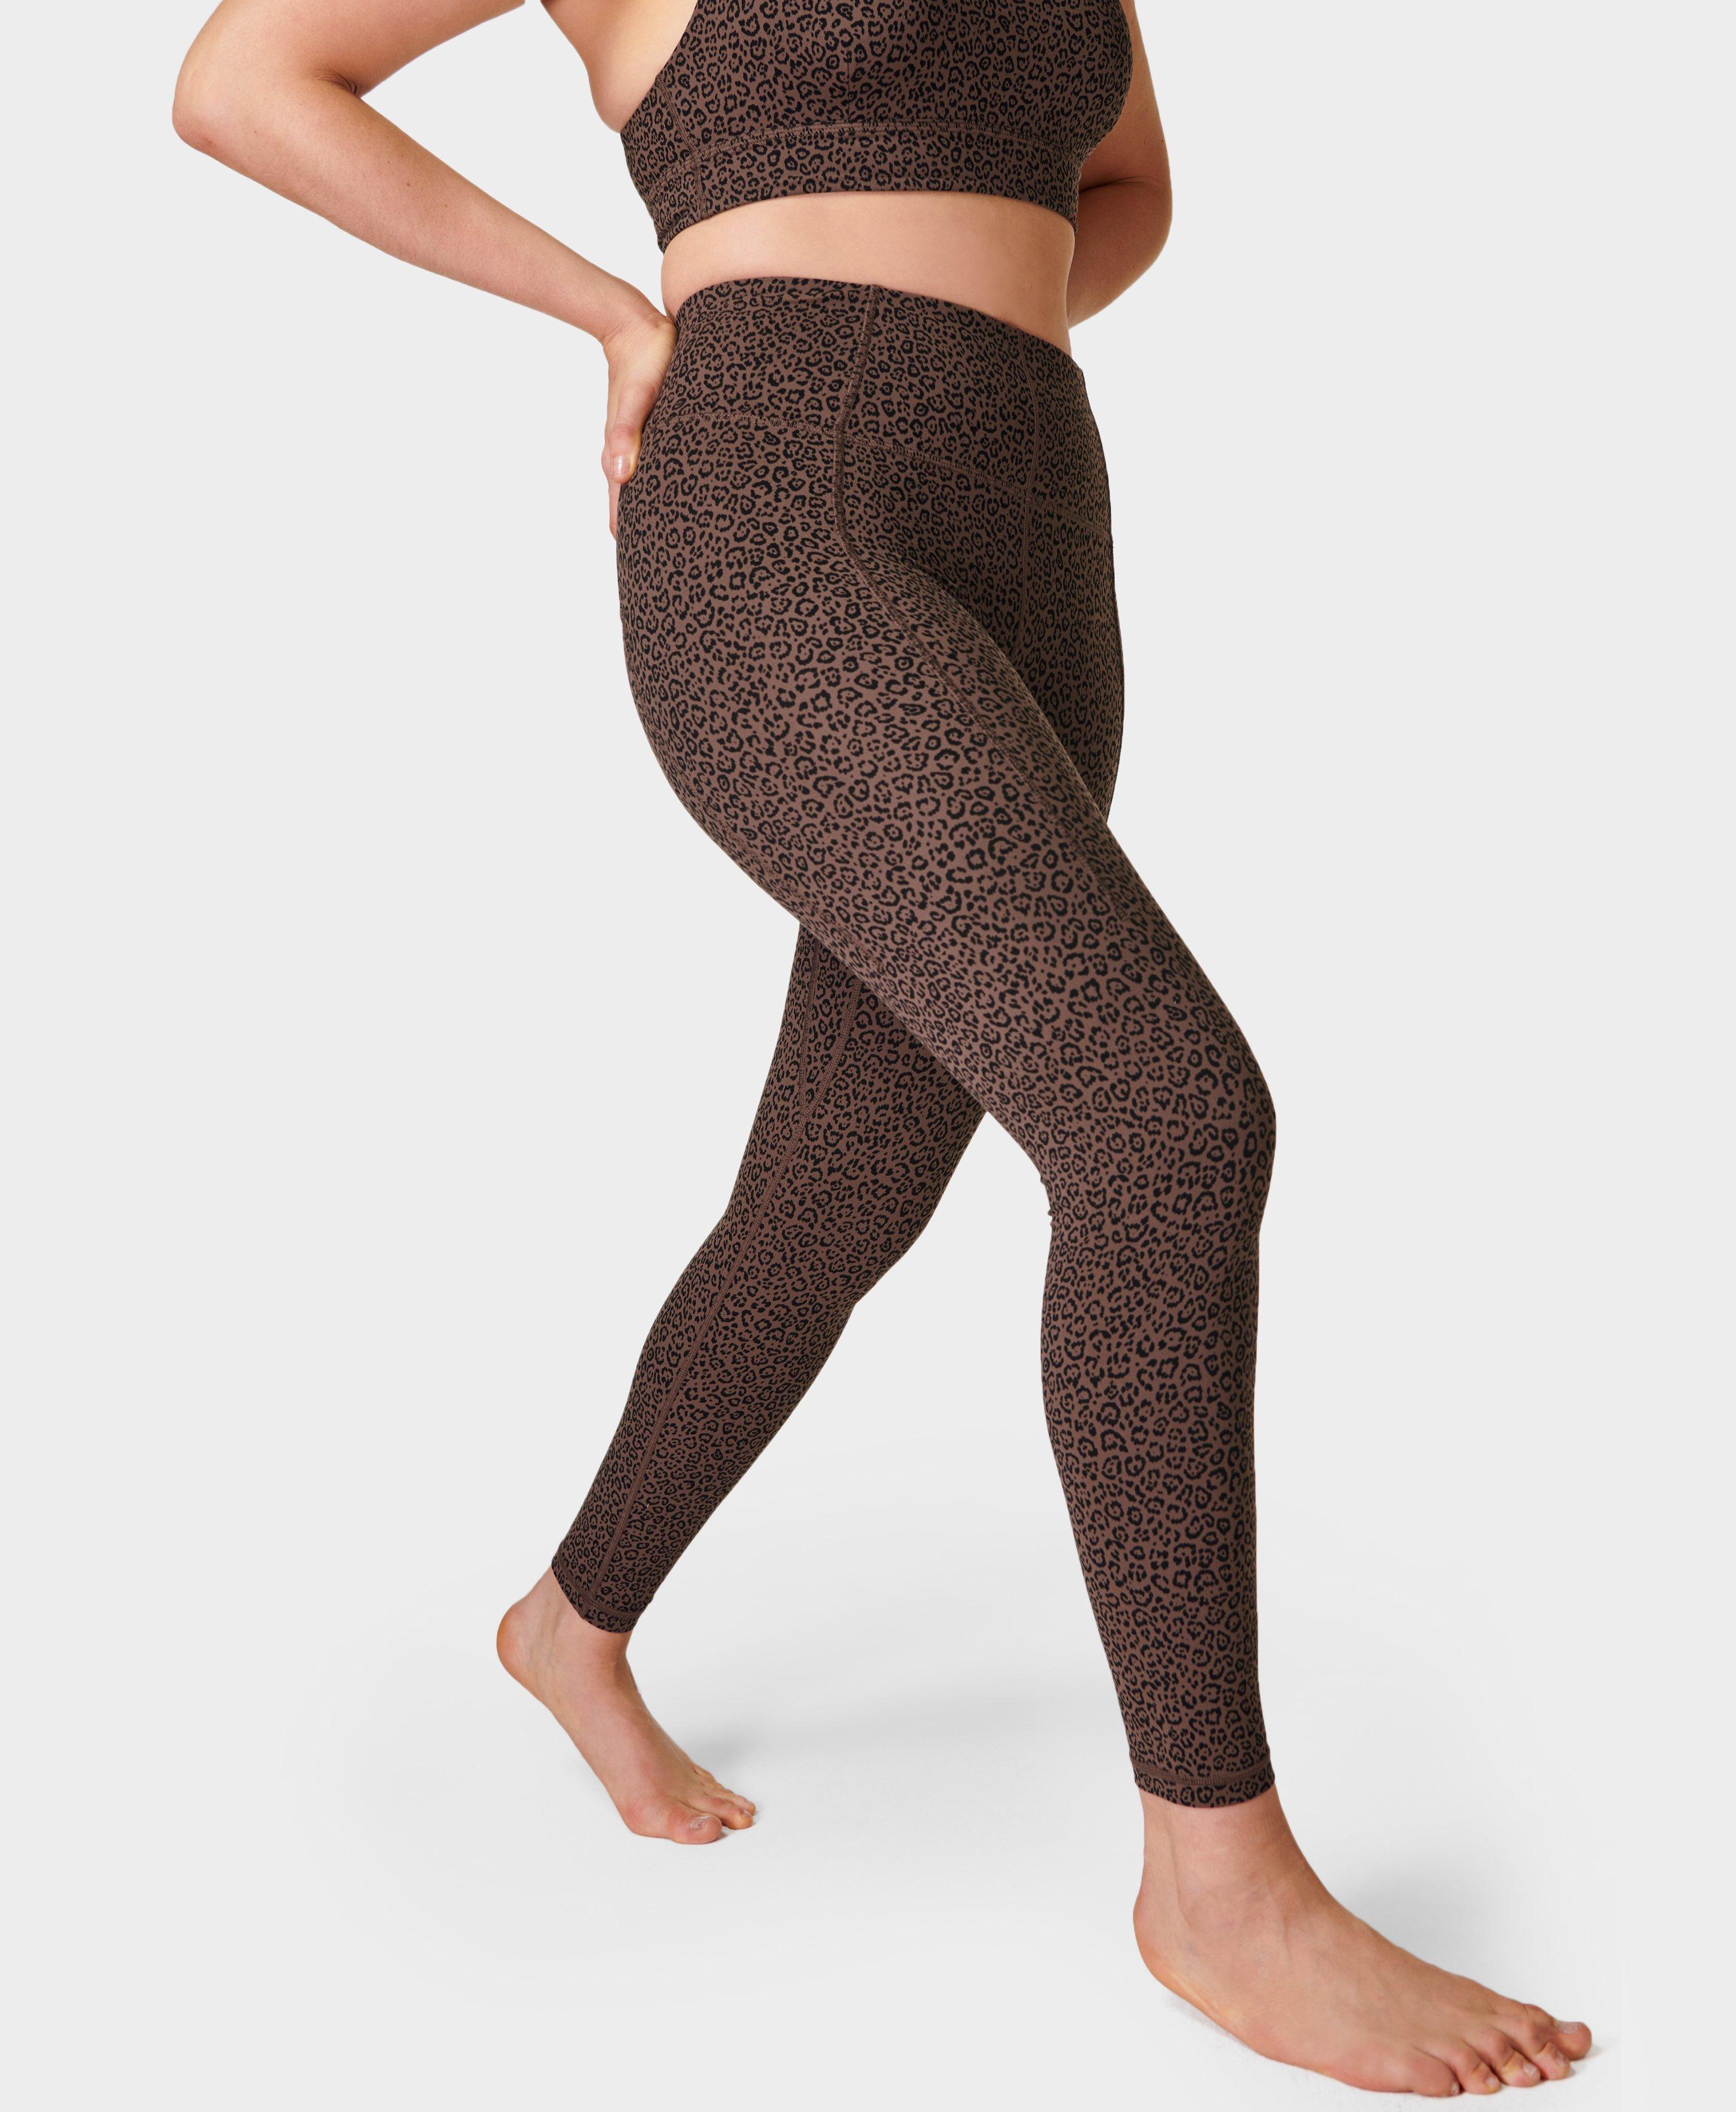 Super Soft Yoga Leggings - Brown Leopard Markings Print